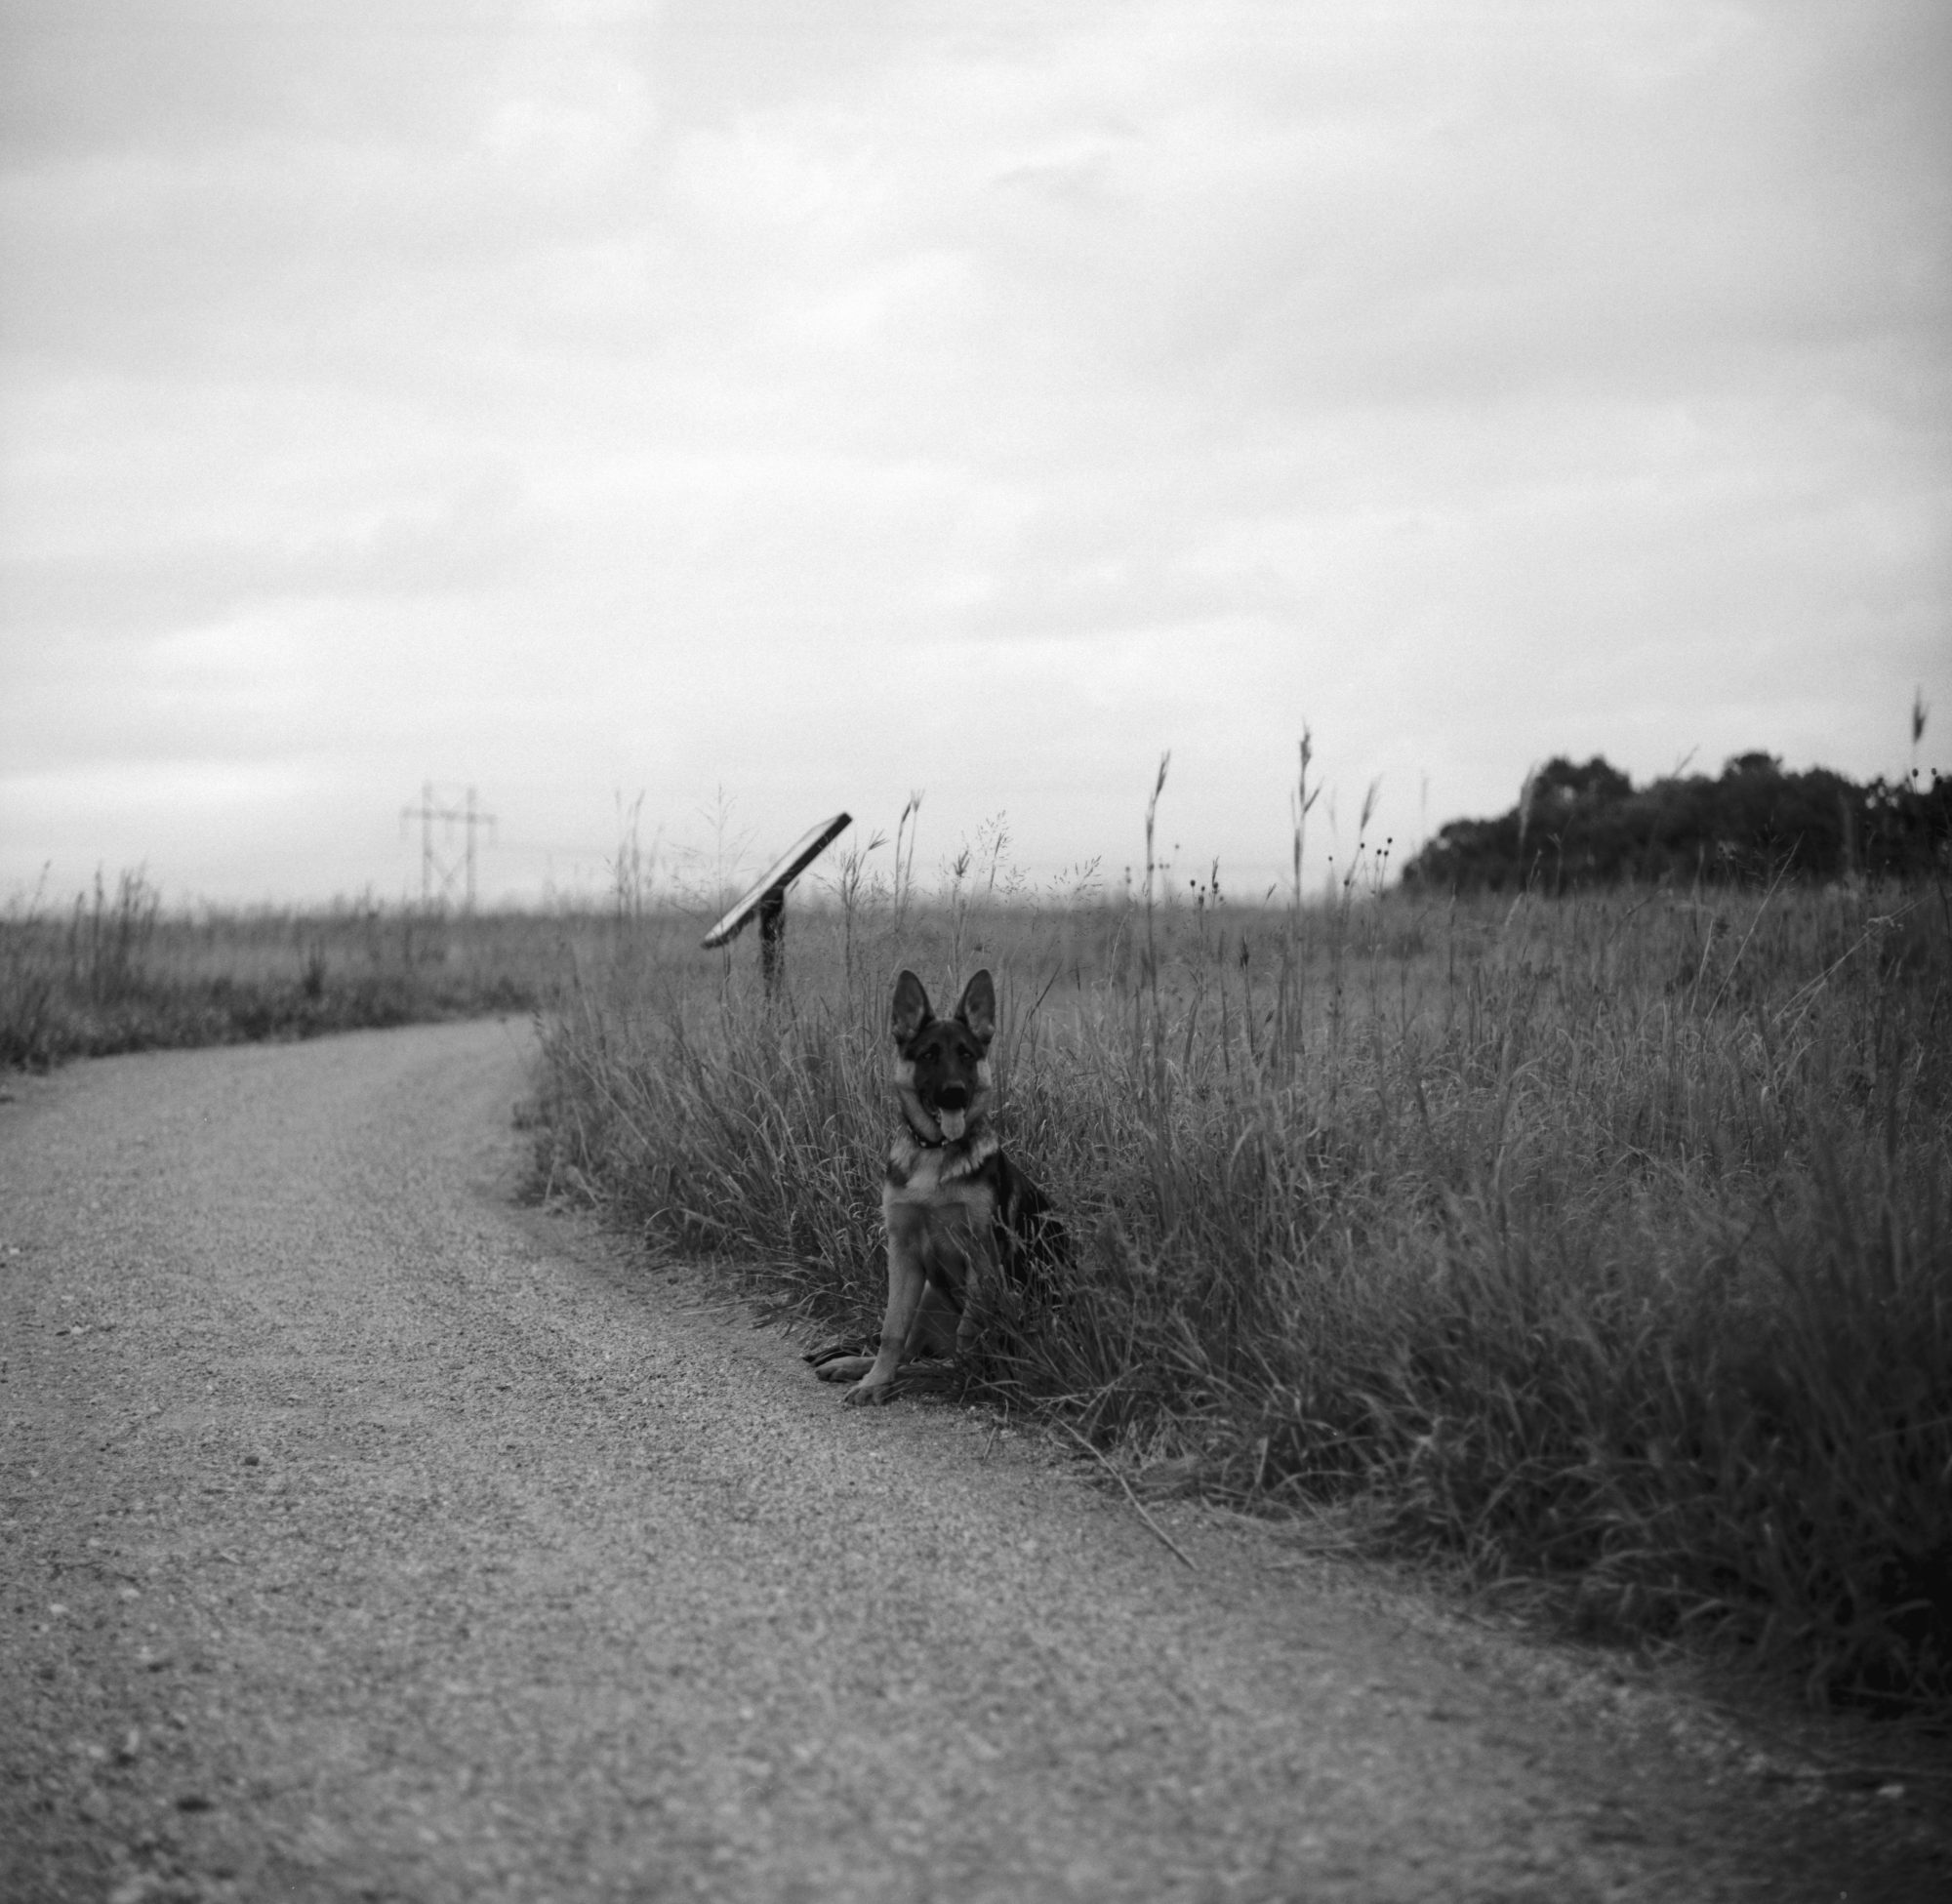 Dog on country road (Pic: Aleks Usovich)